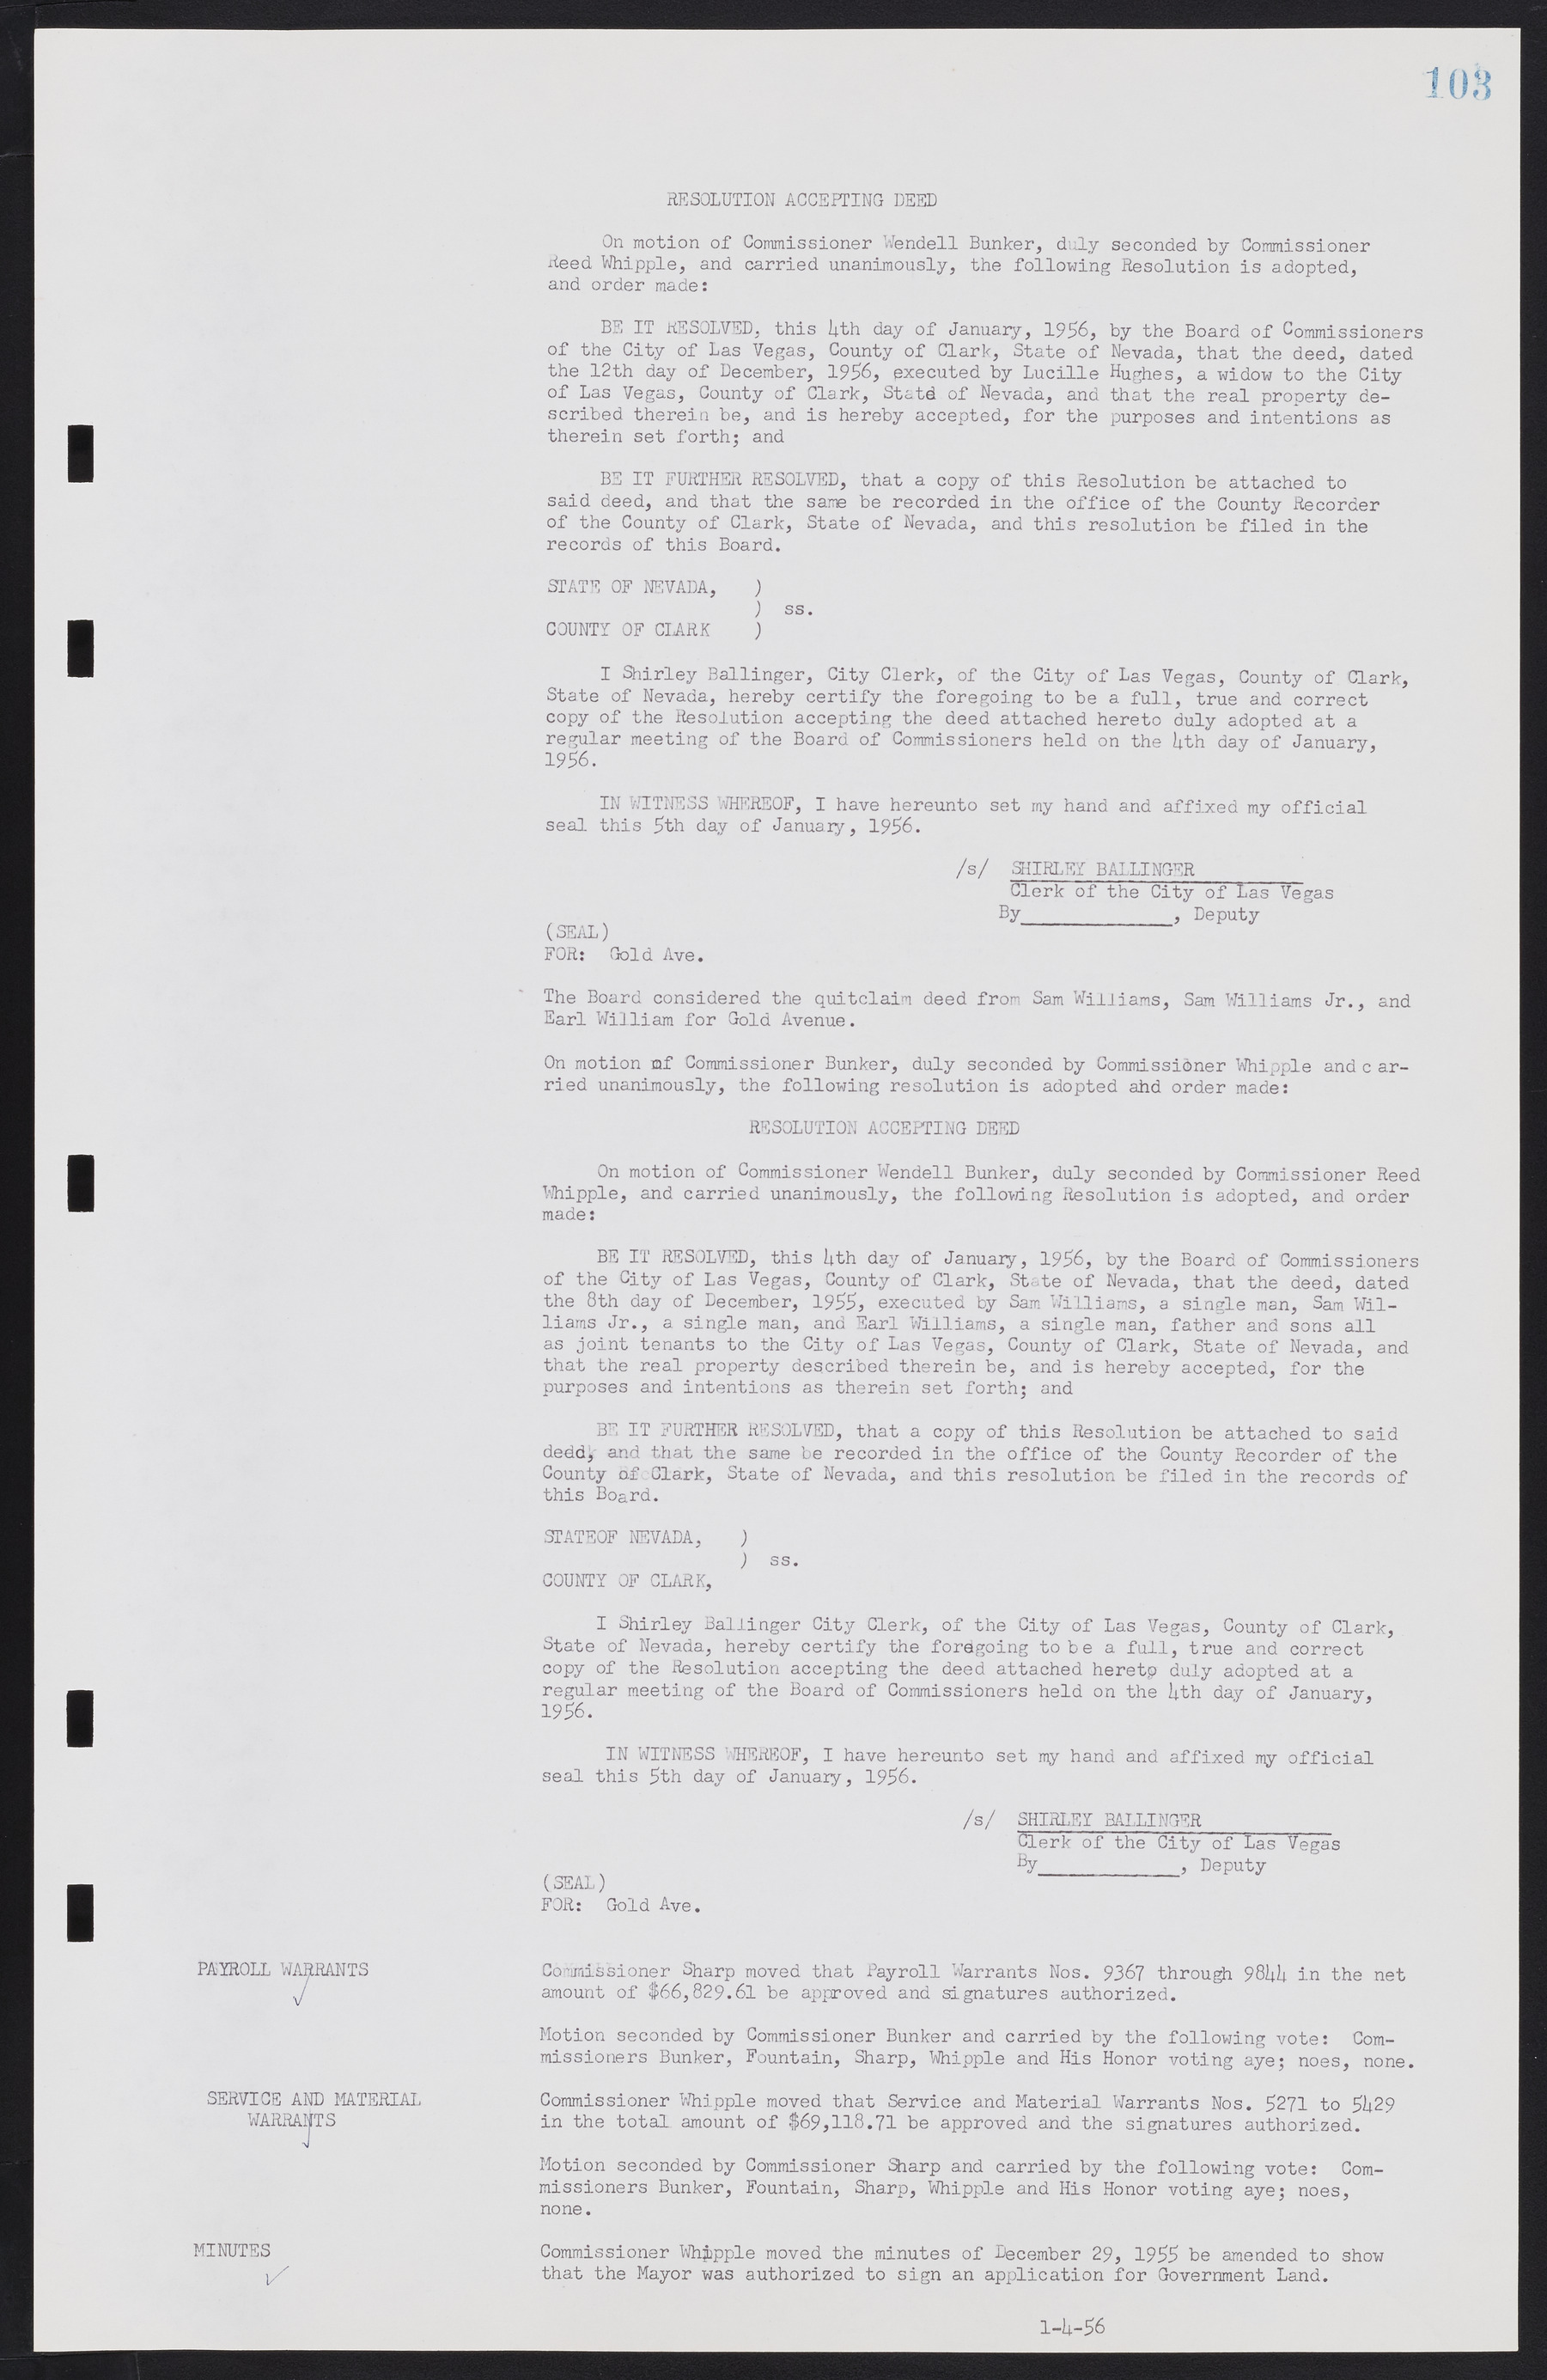 Las Vegas City Commission Minutes, September 21, 1955 to November 20, 1957, lvc000010-113